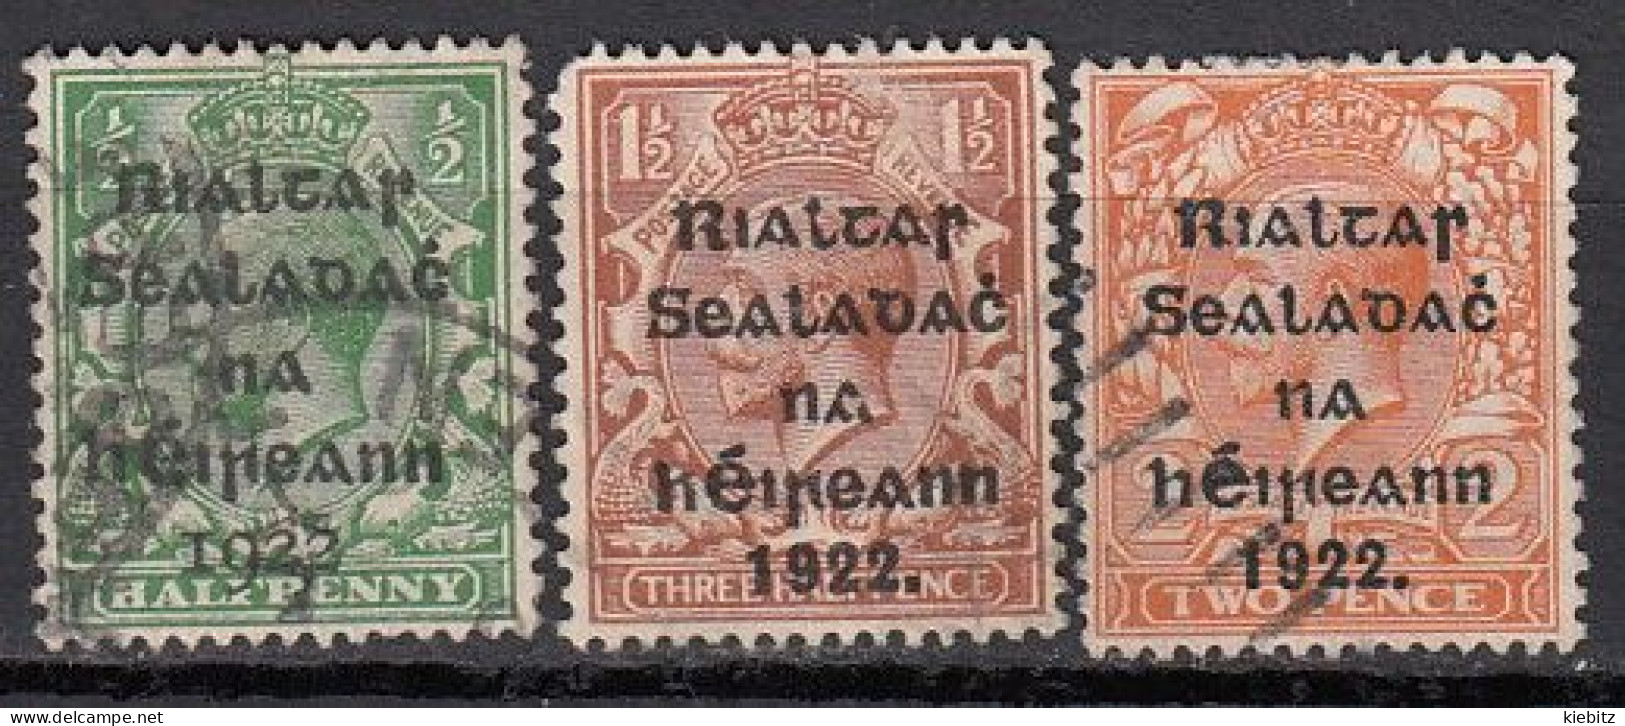 IRLAND 1922 - 3 Aufdruckwerte Used - Used Stamps